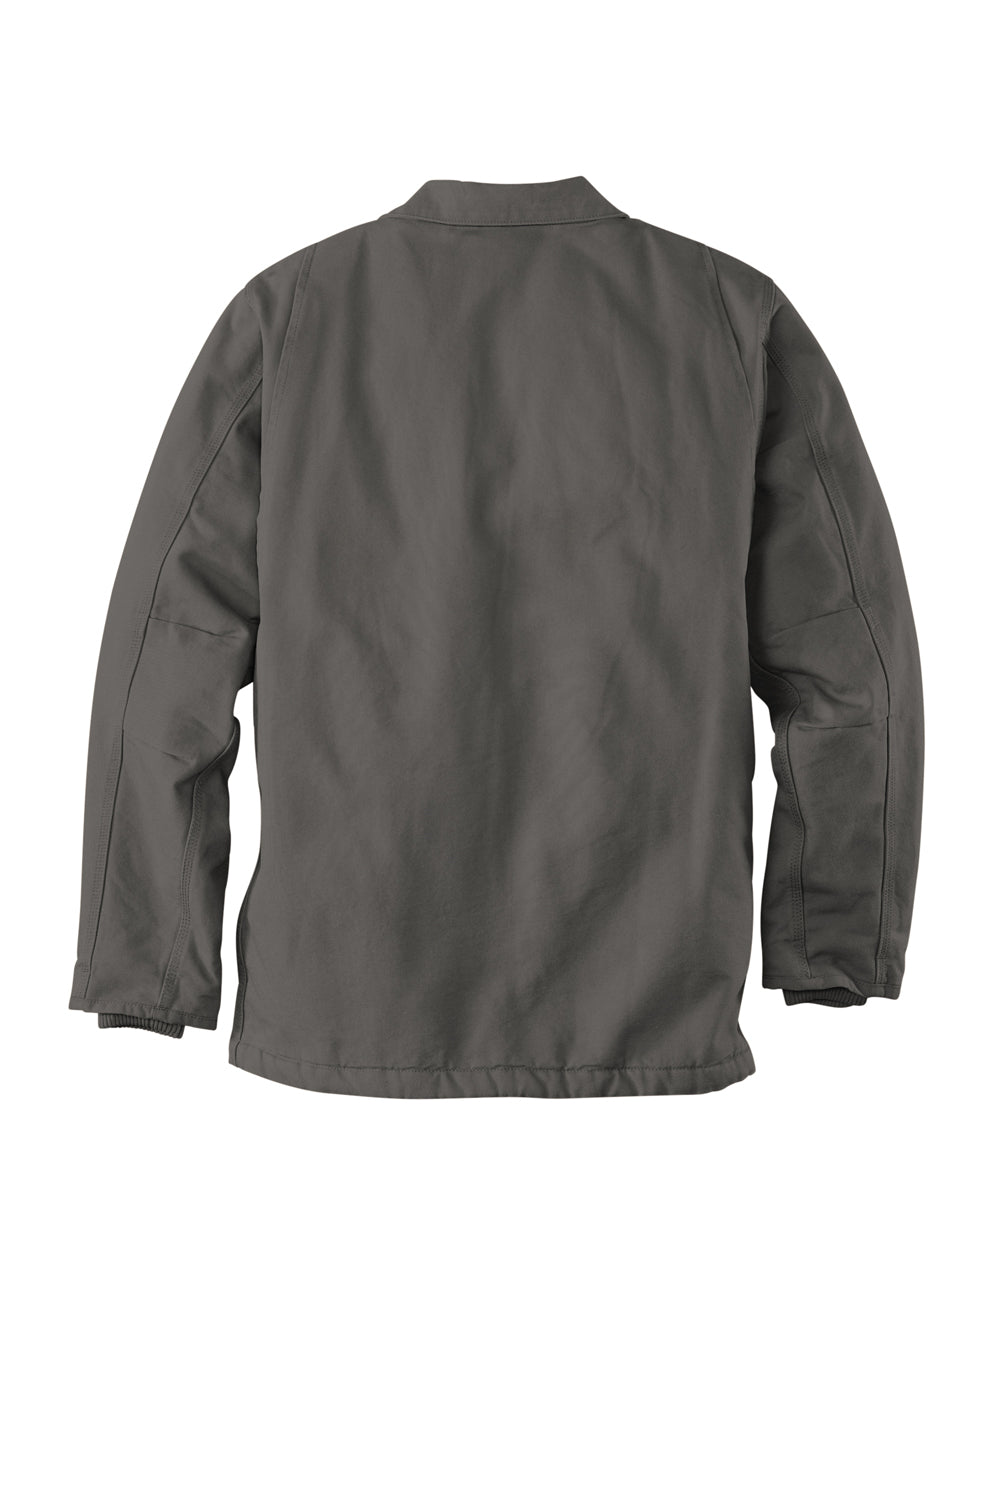 Carhartt CT104293/CTT104293 Mens Sherpa Lined Full Zip Jacket Gravel Grey Flat Back